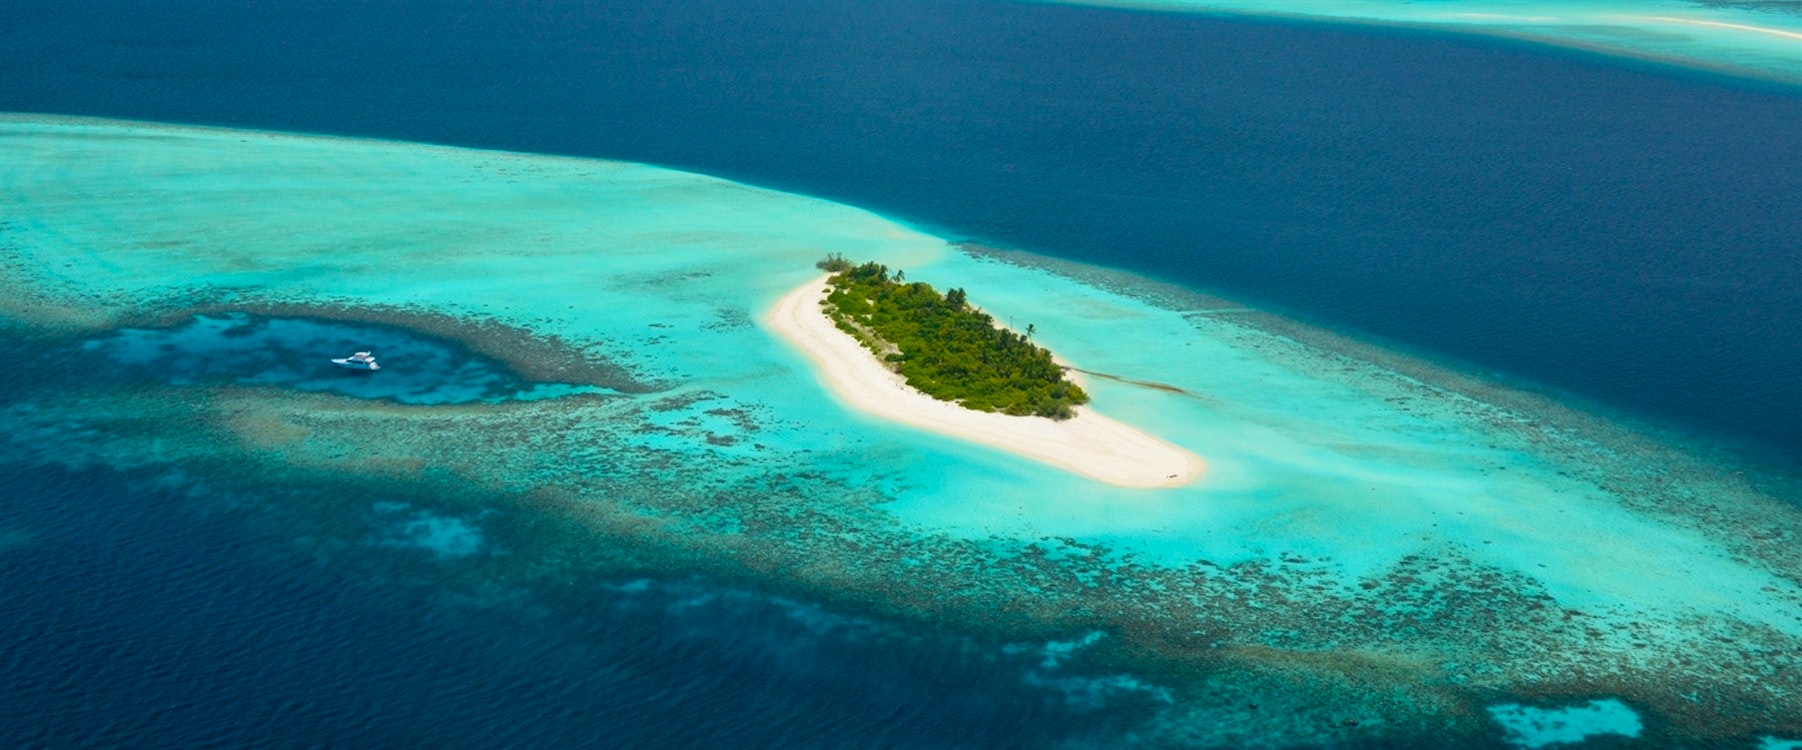 Four Seasons Voavah Maldives Private Island